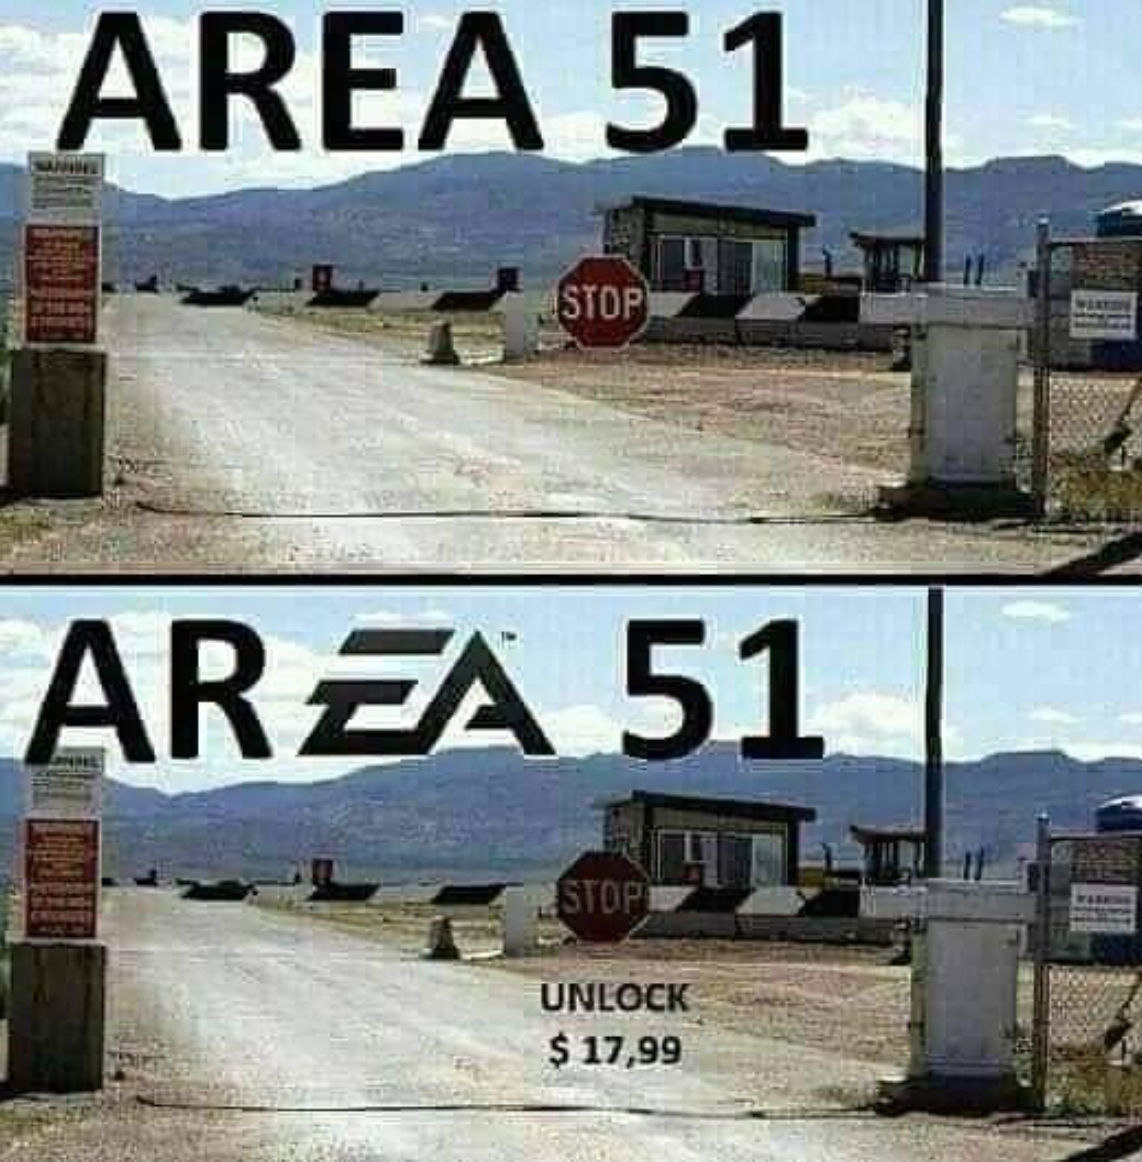 funny gaming memes - ea games 51 meme - Area 51 Stop Area 51 Stopi Unlock $ 17,99